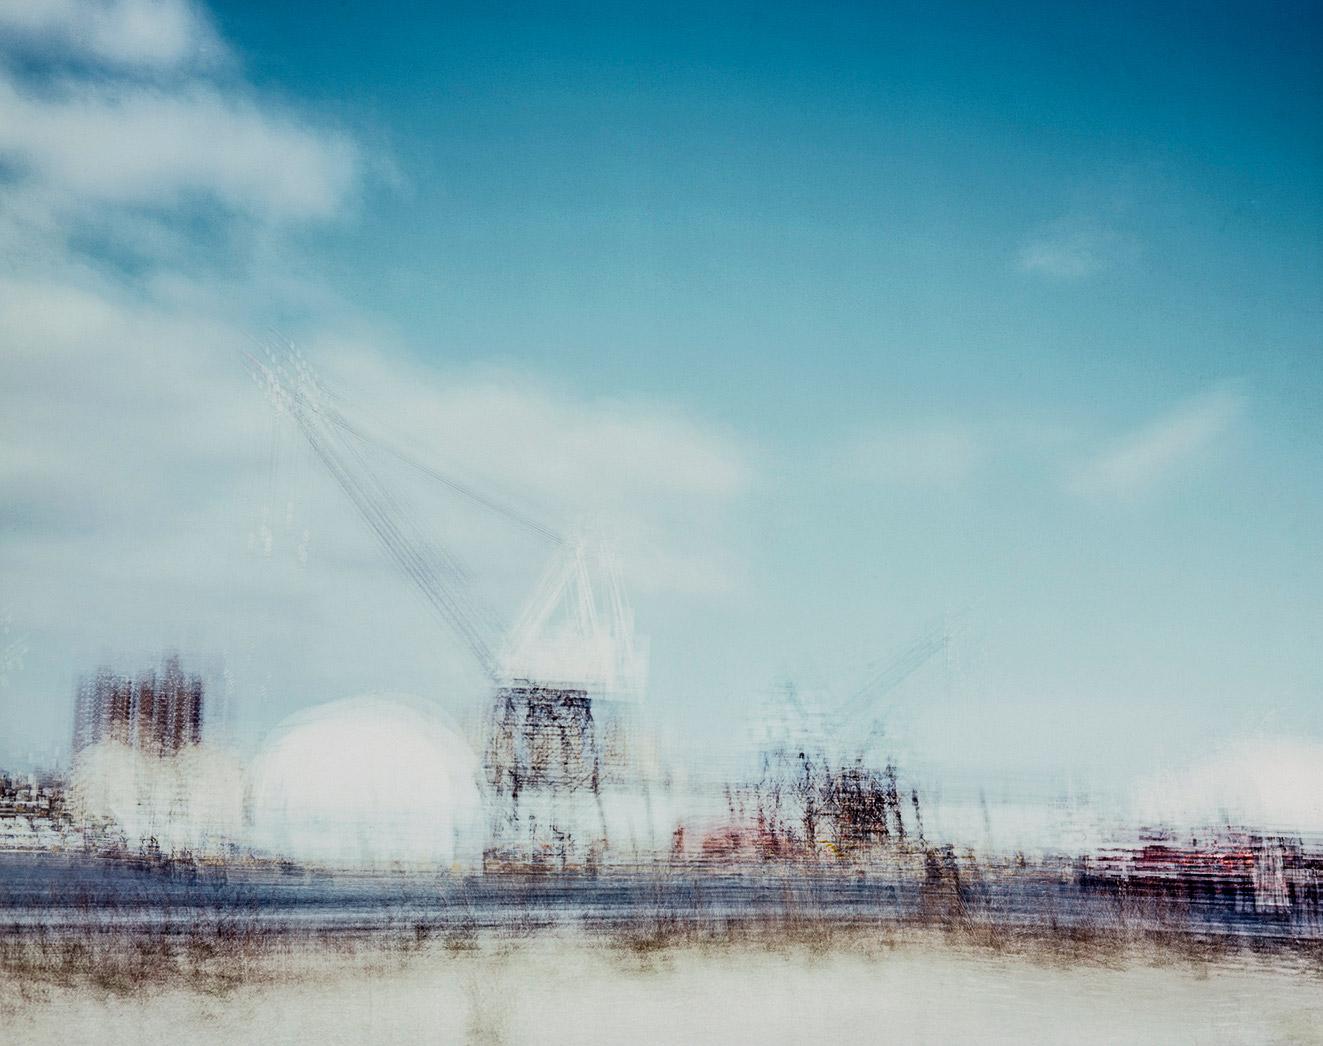 Poby Abstract Photograph - Brooklyn Navy Yard